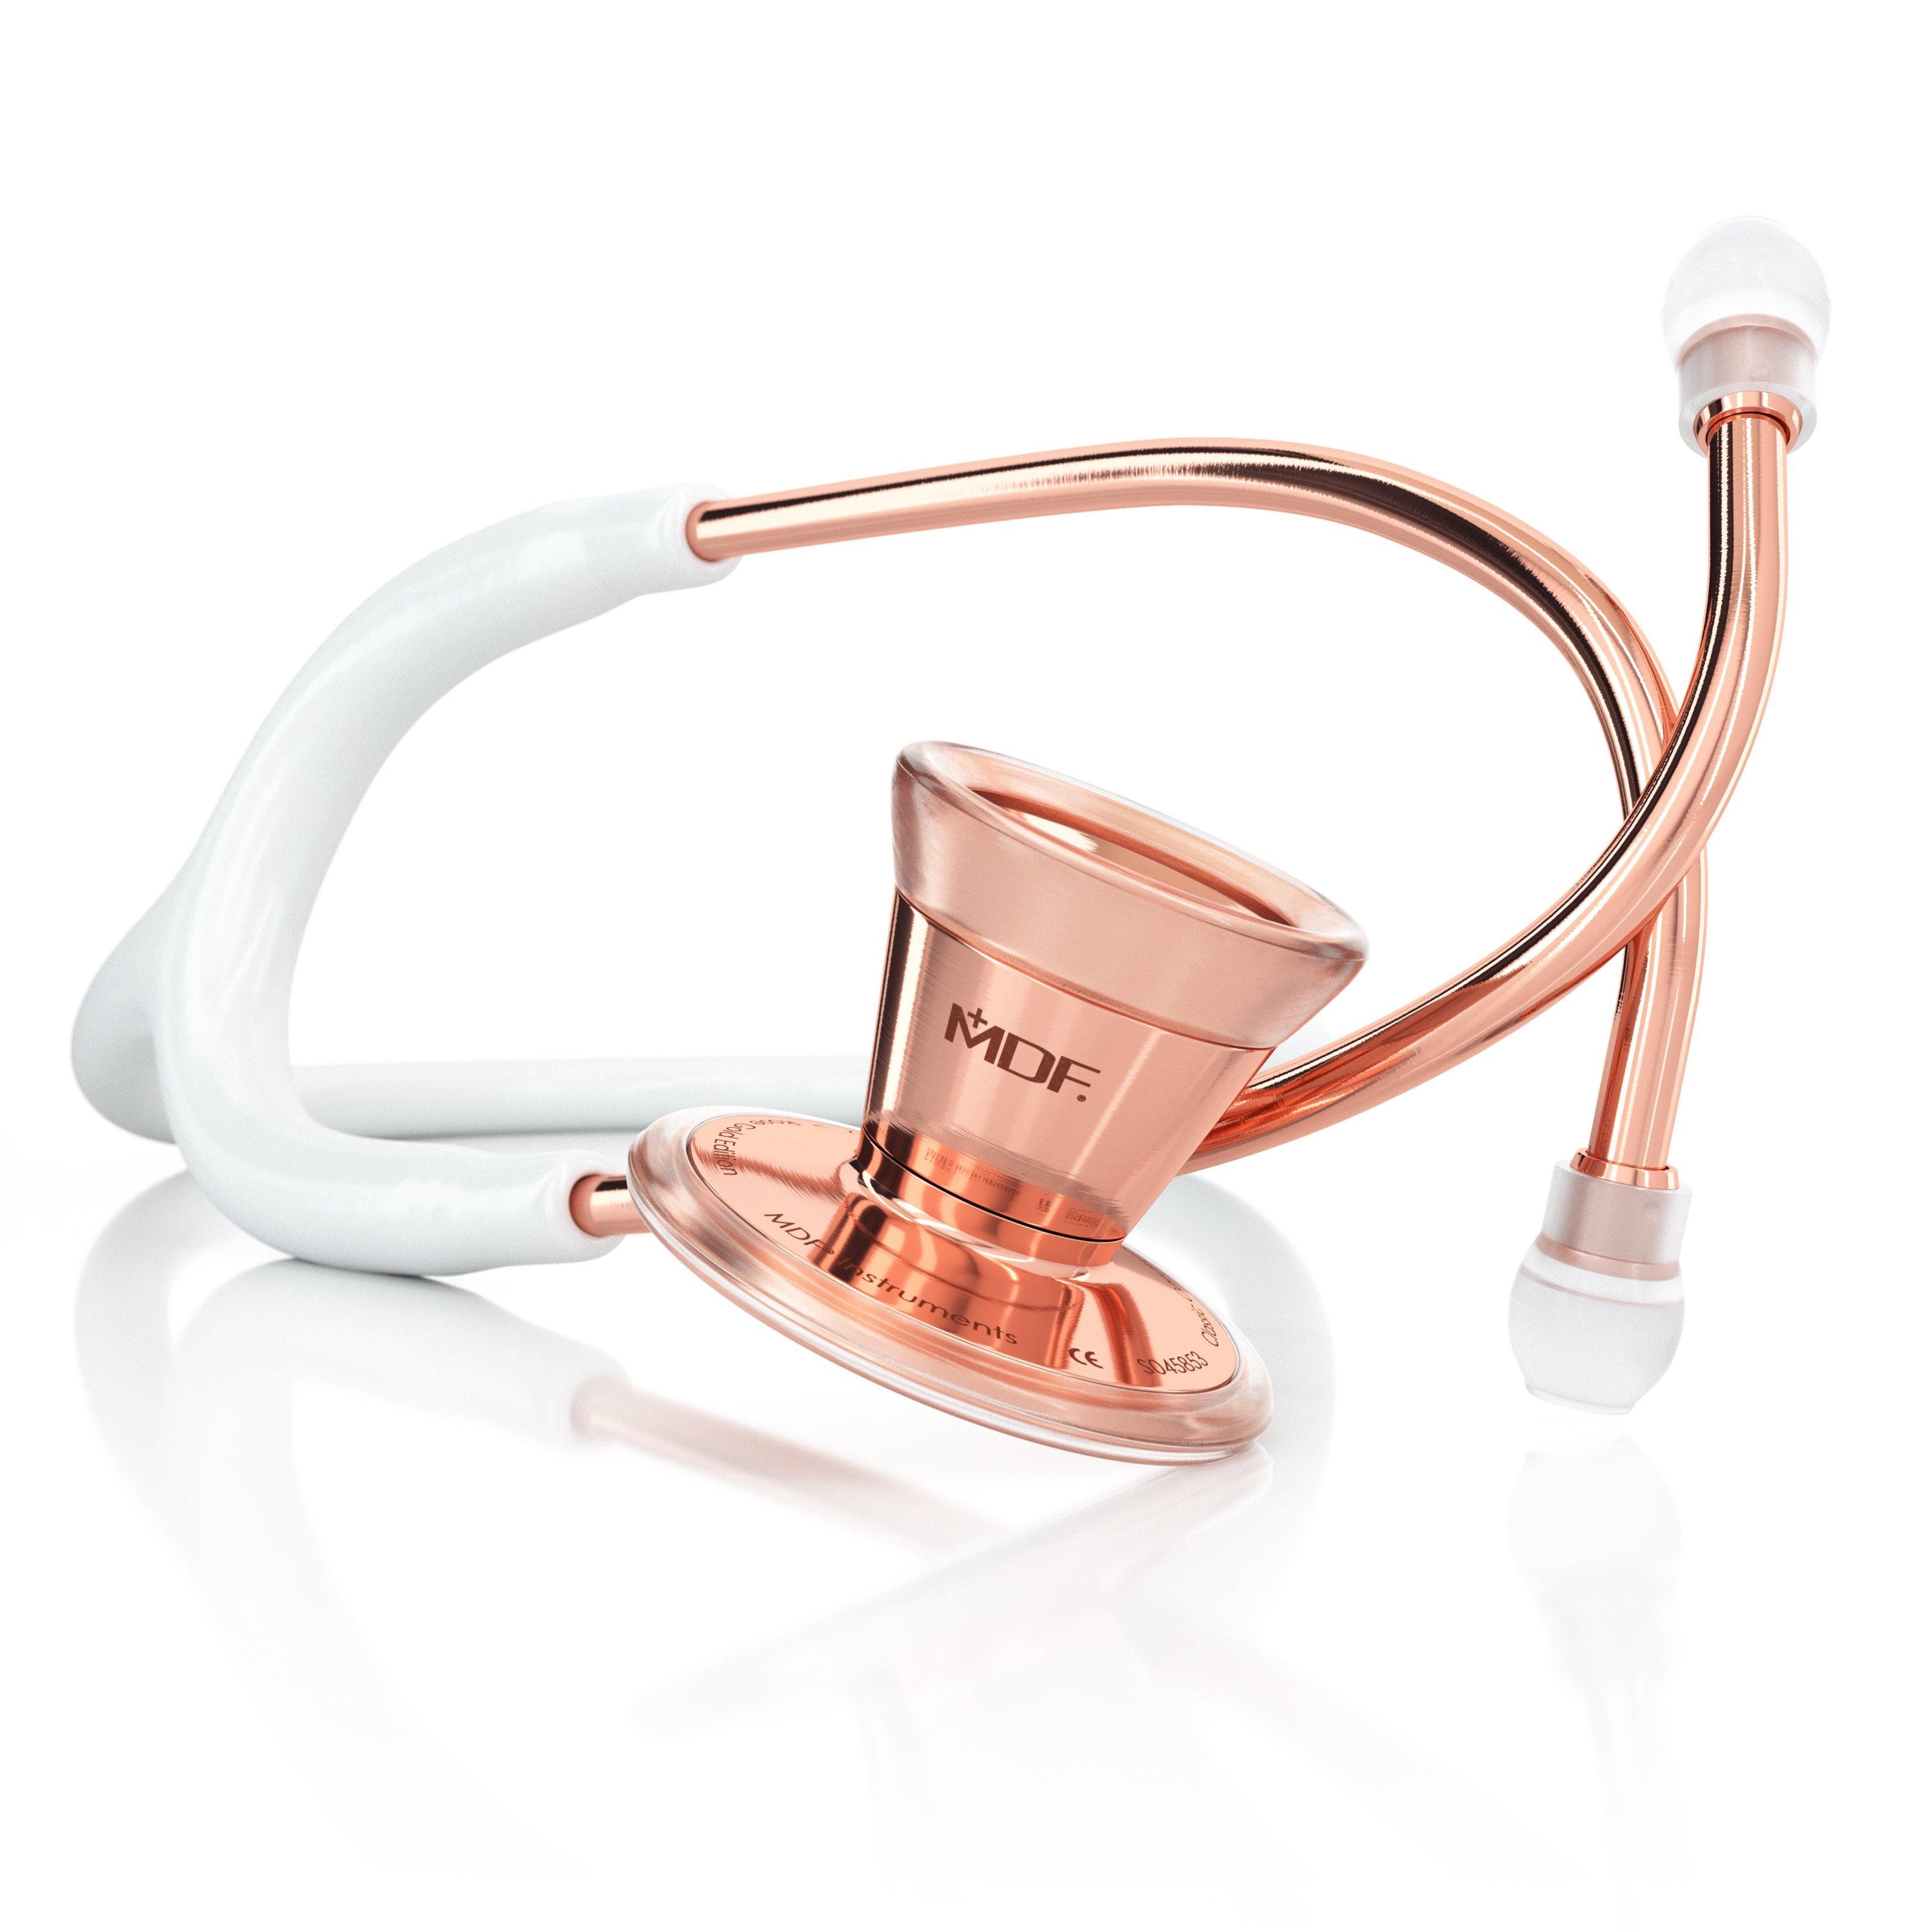 ProCardial® Adult Cardiology Stethoscope - White/Rose Gold - MDF Instruments UK